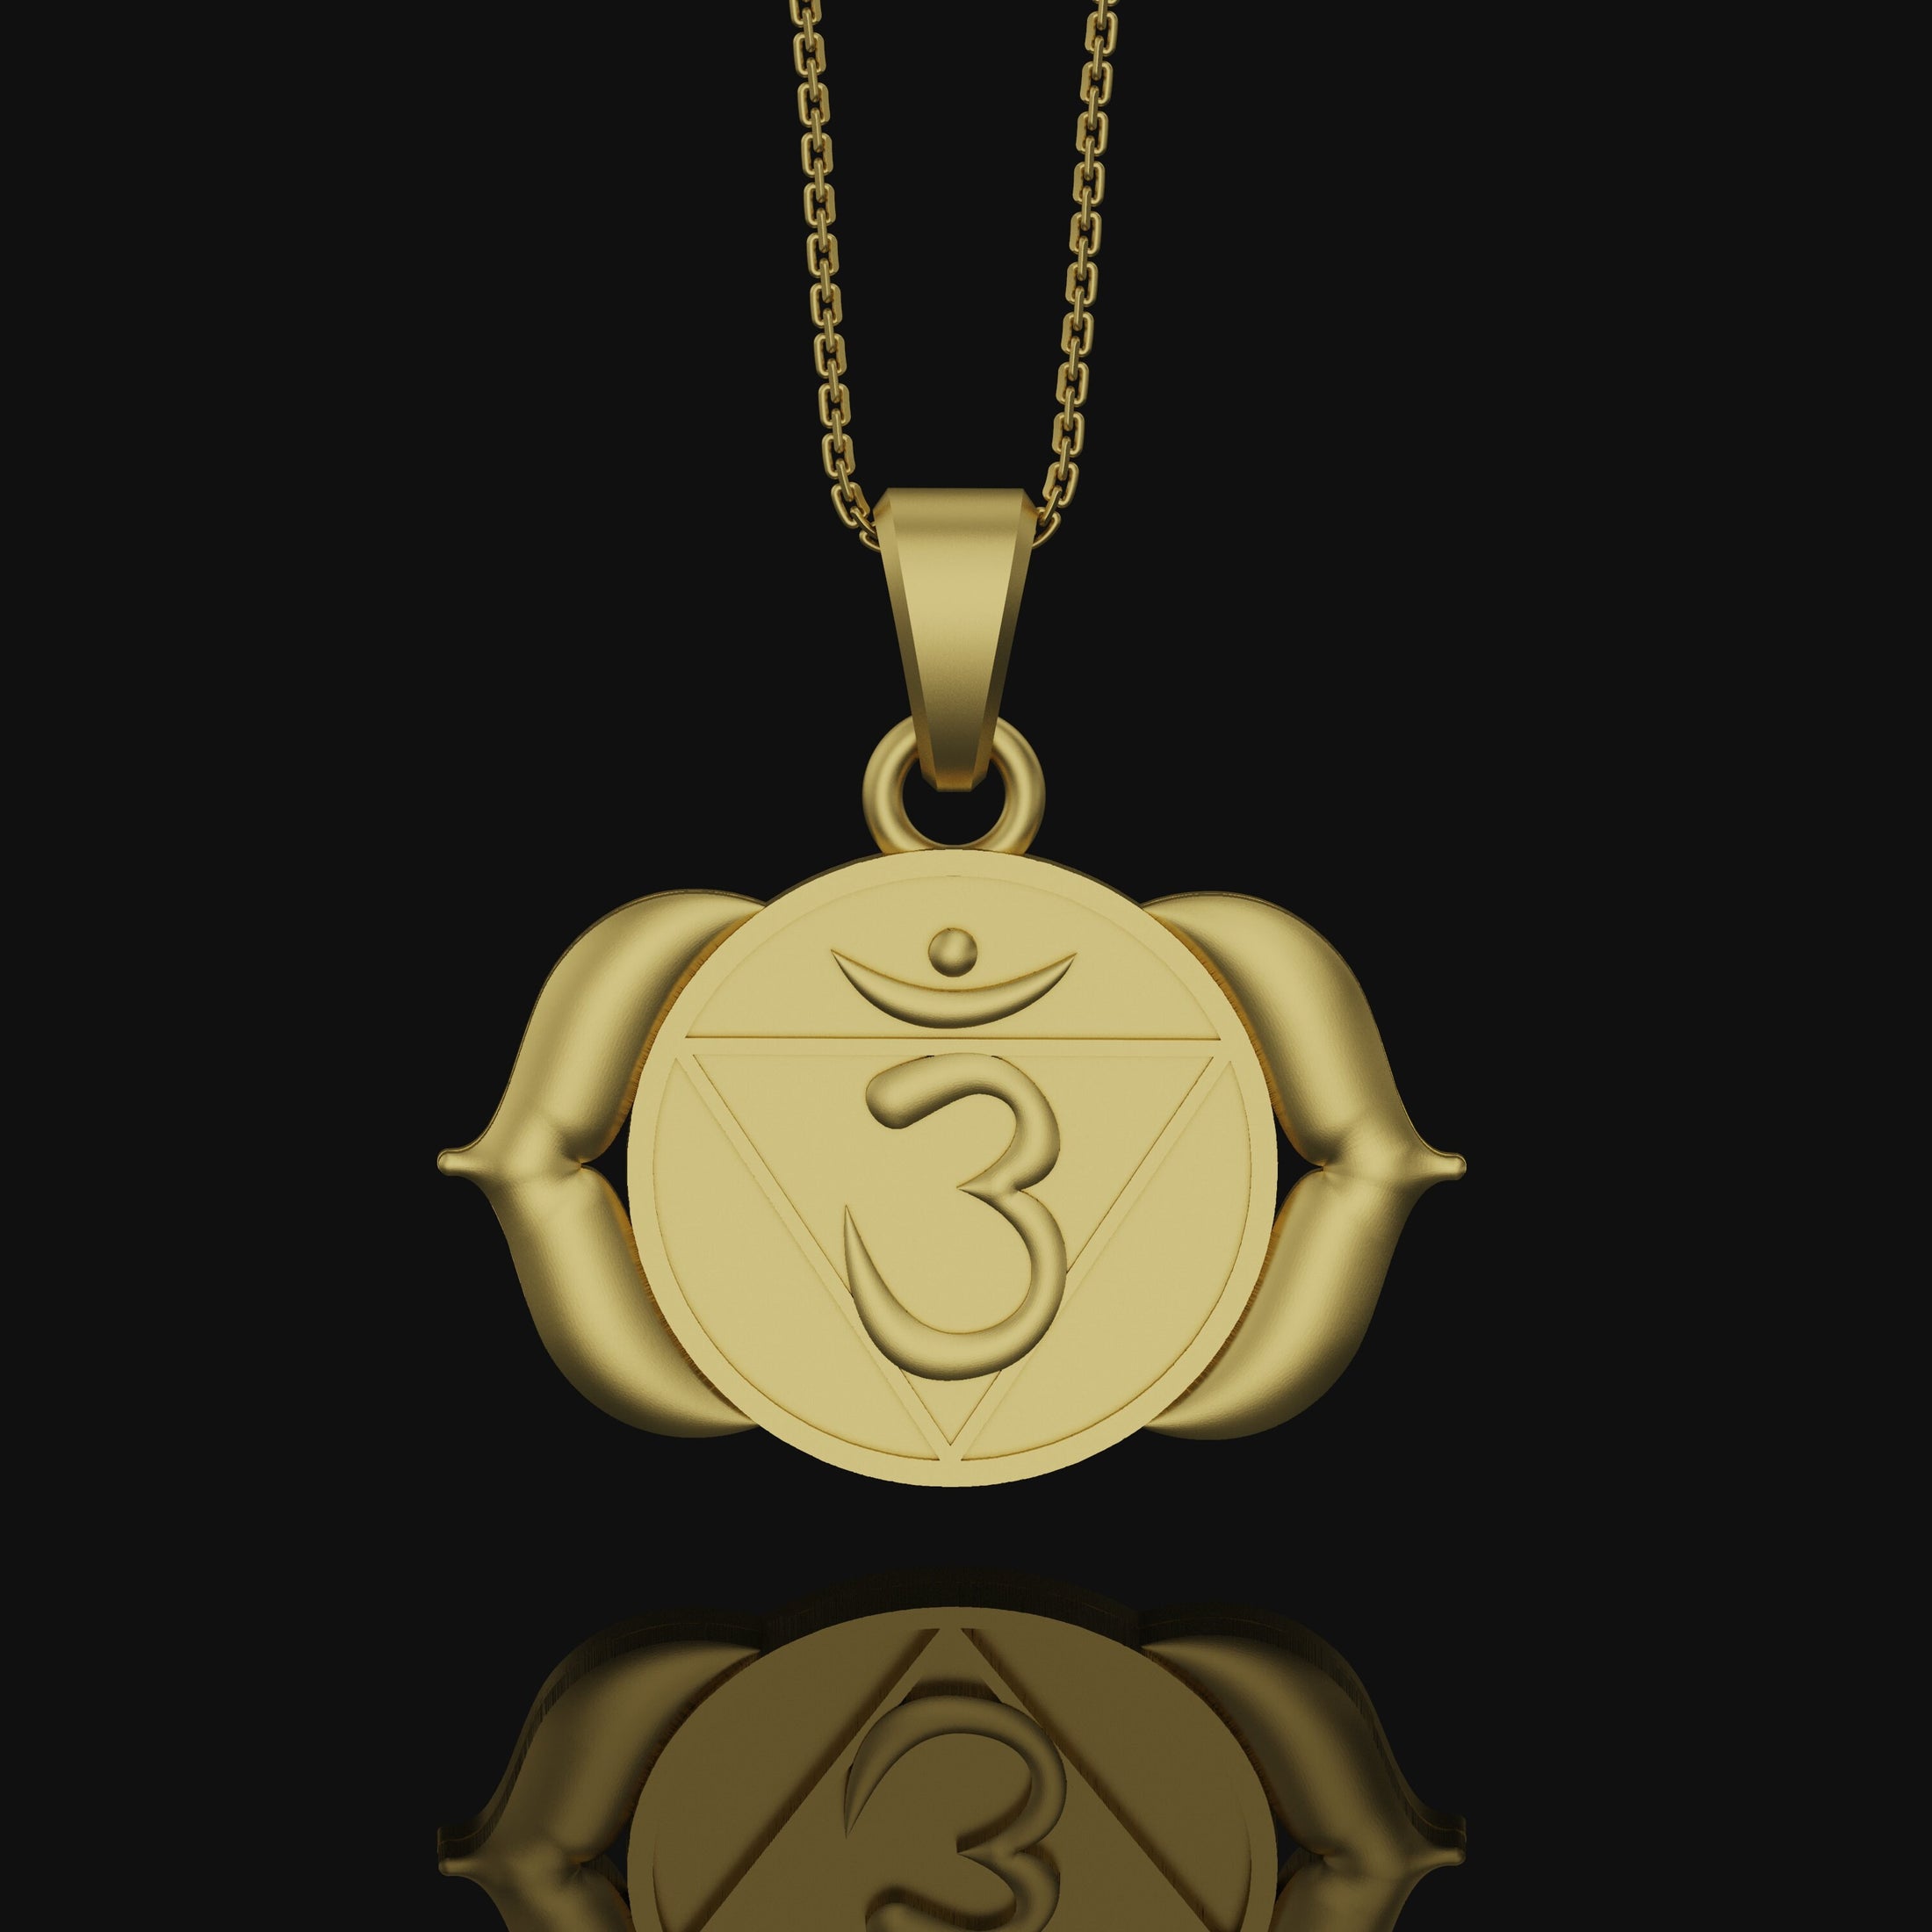 Third Eye Chakra Necklace, Chakras, Meditation, Reiki, Spiritual Gift, Metaphysical, Gift For Her, Handmade Jewelry Gold Finish